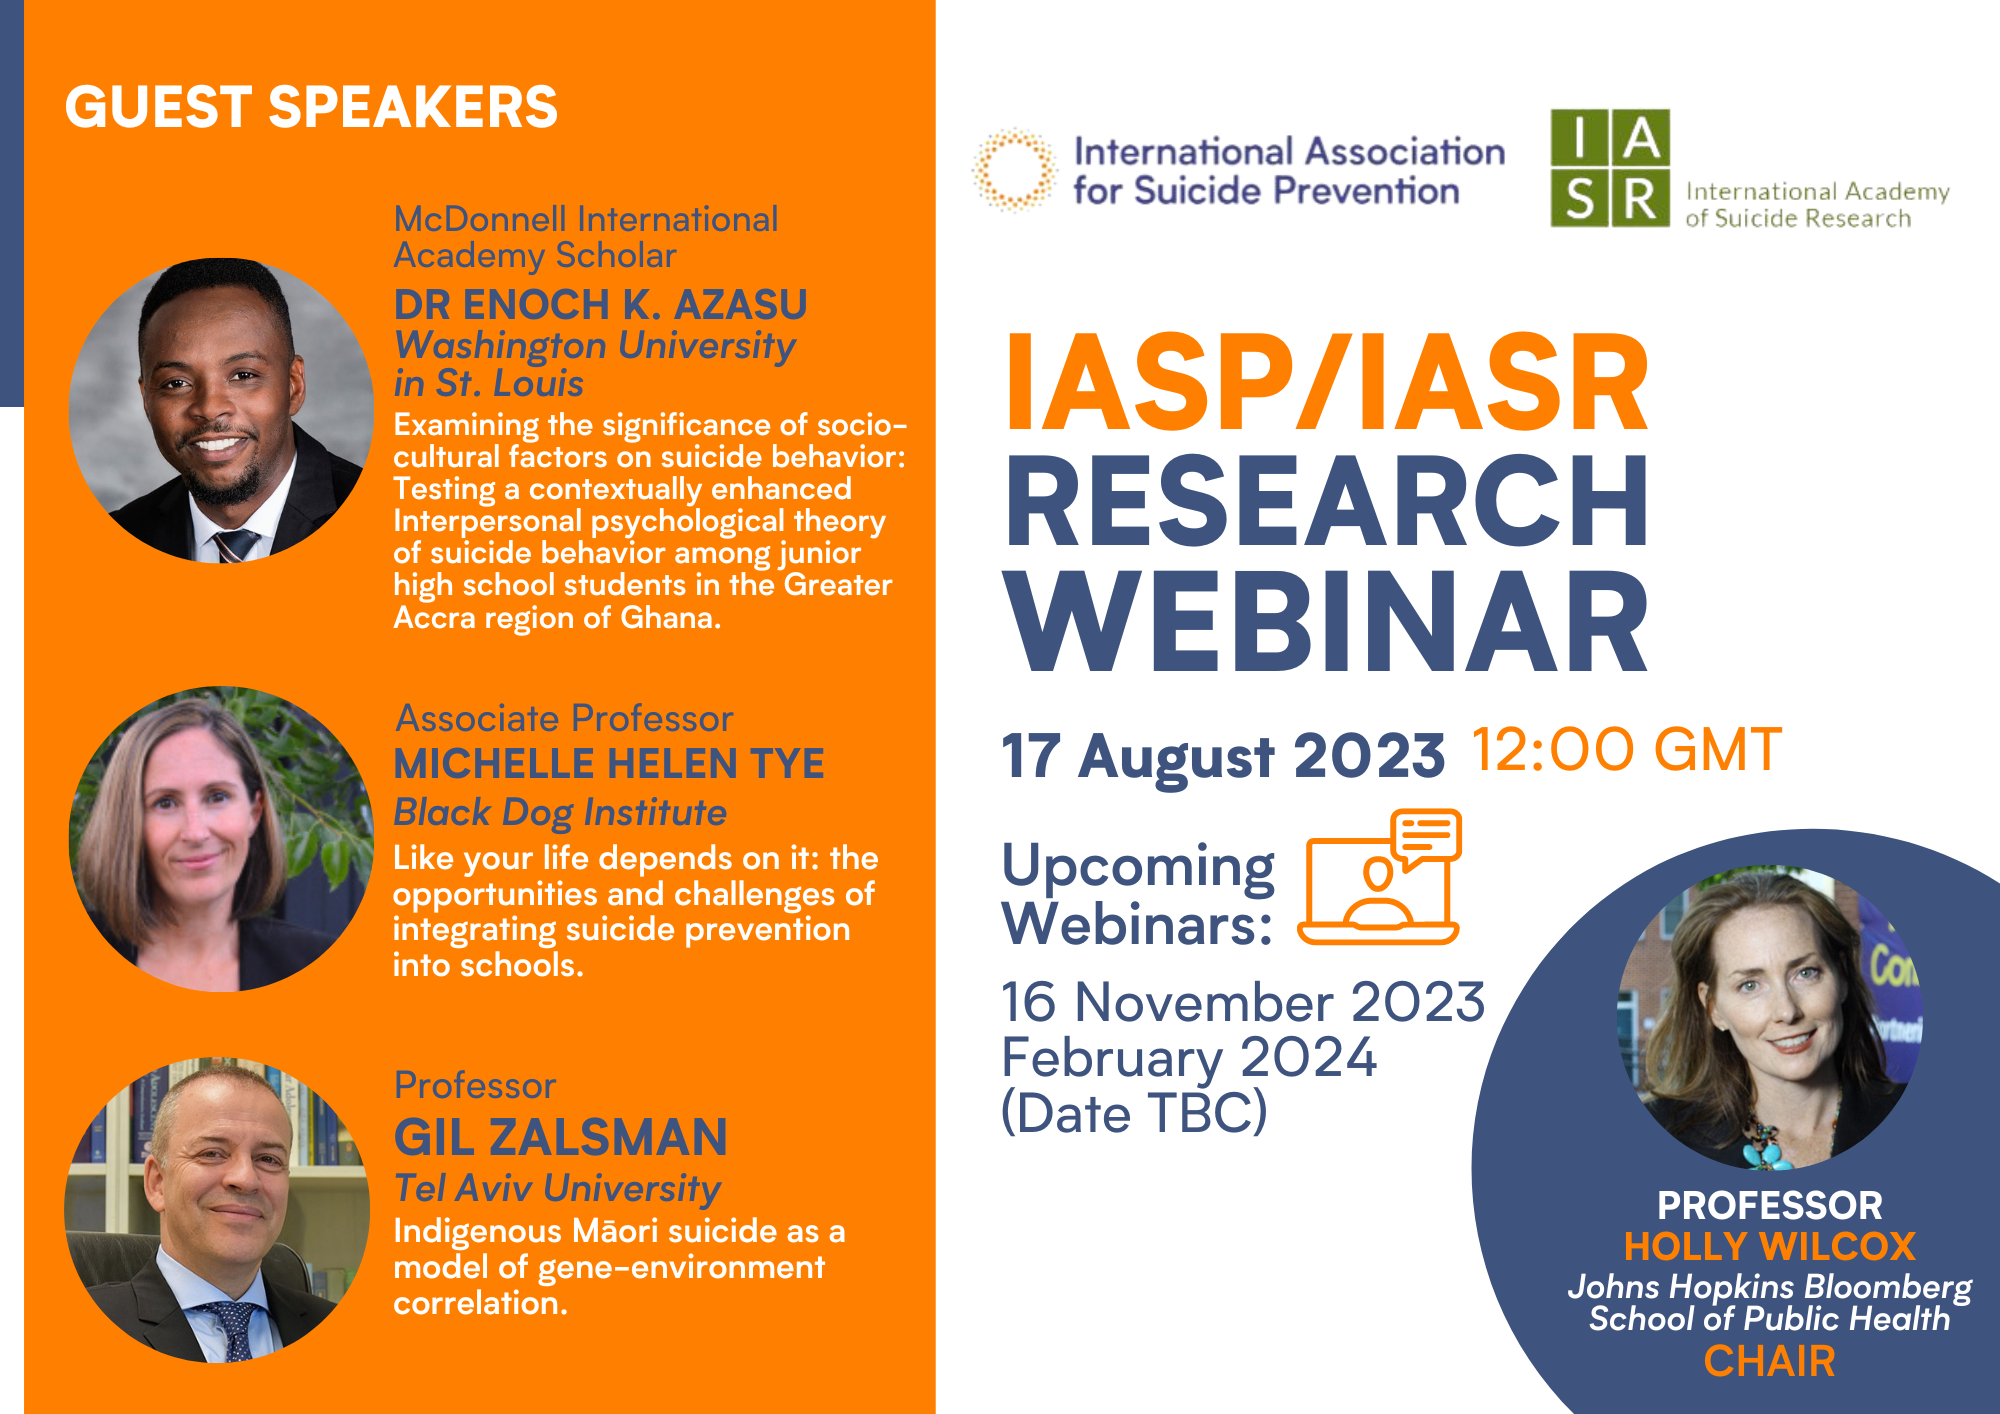 IASR - IASP Research Seminar